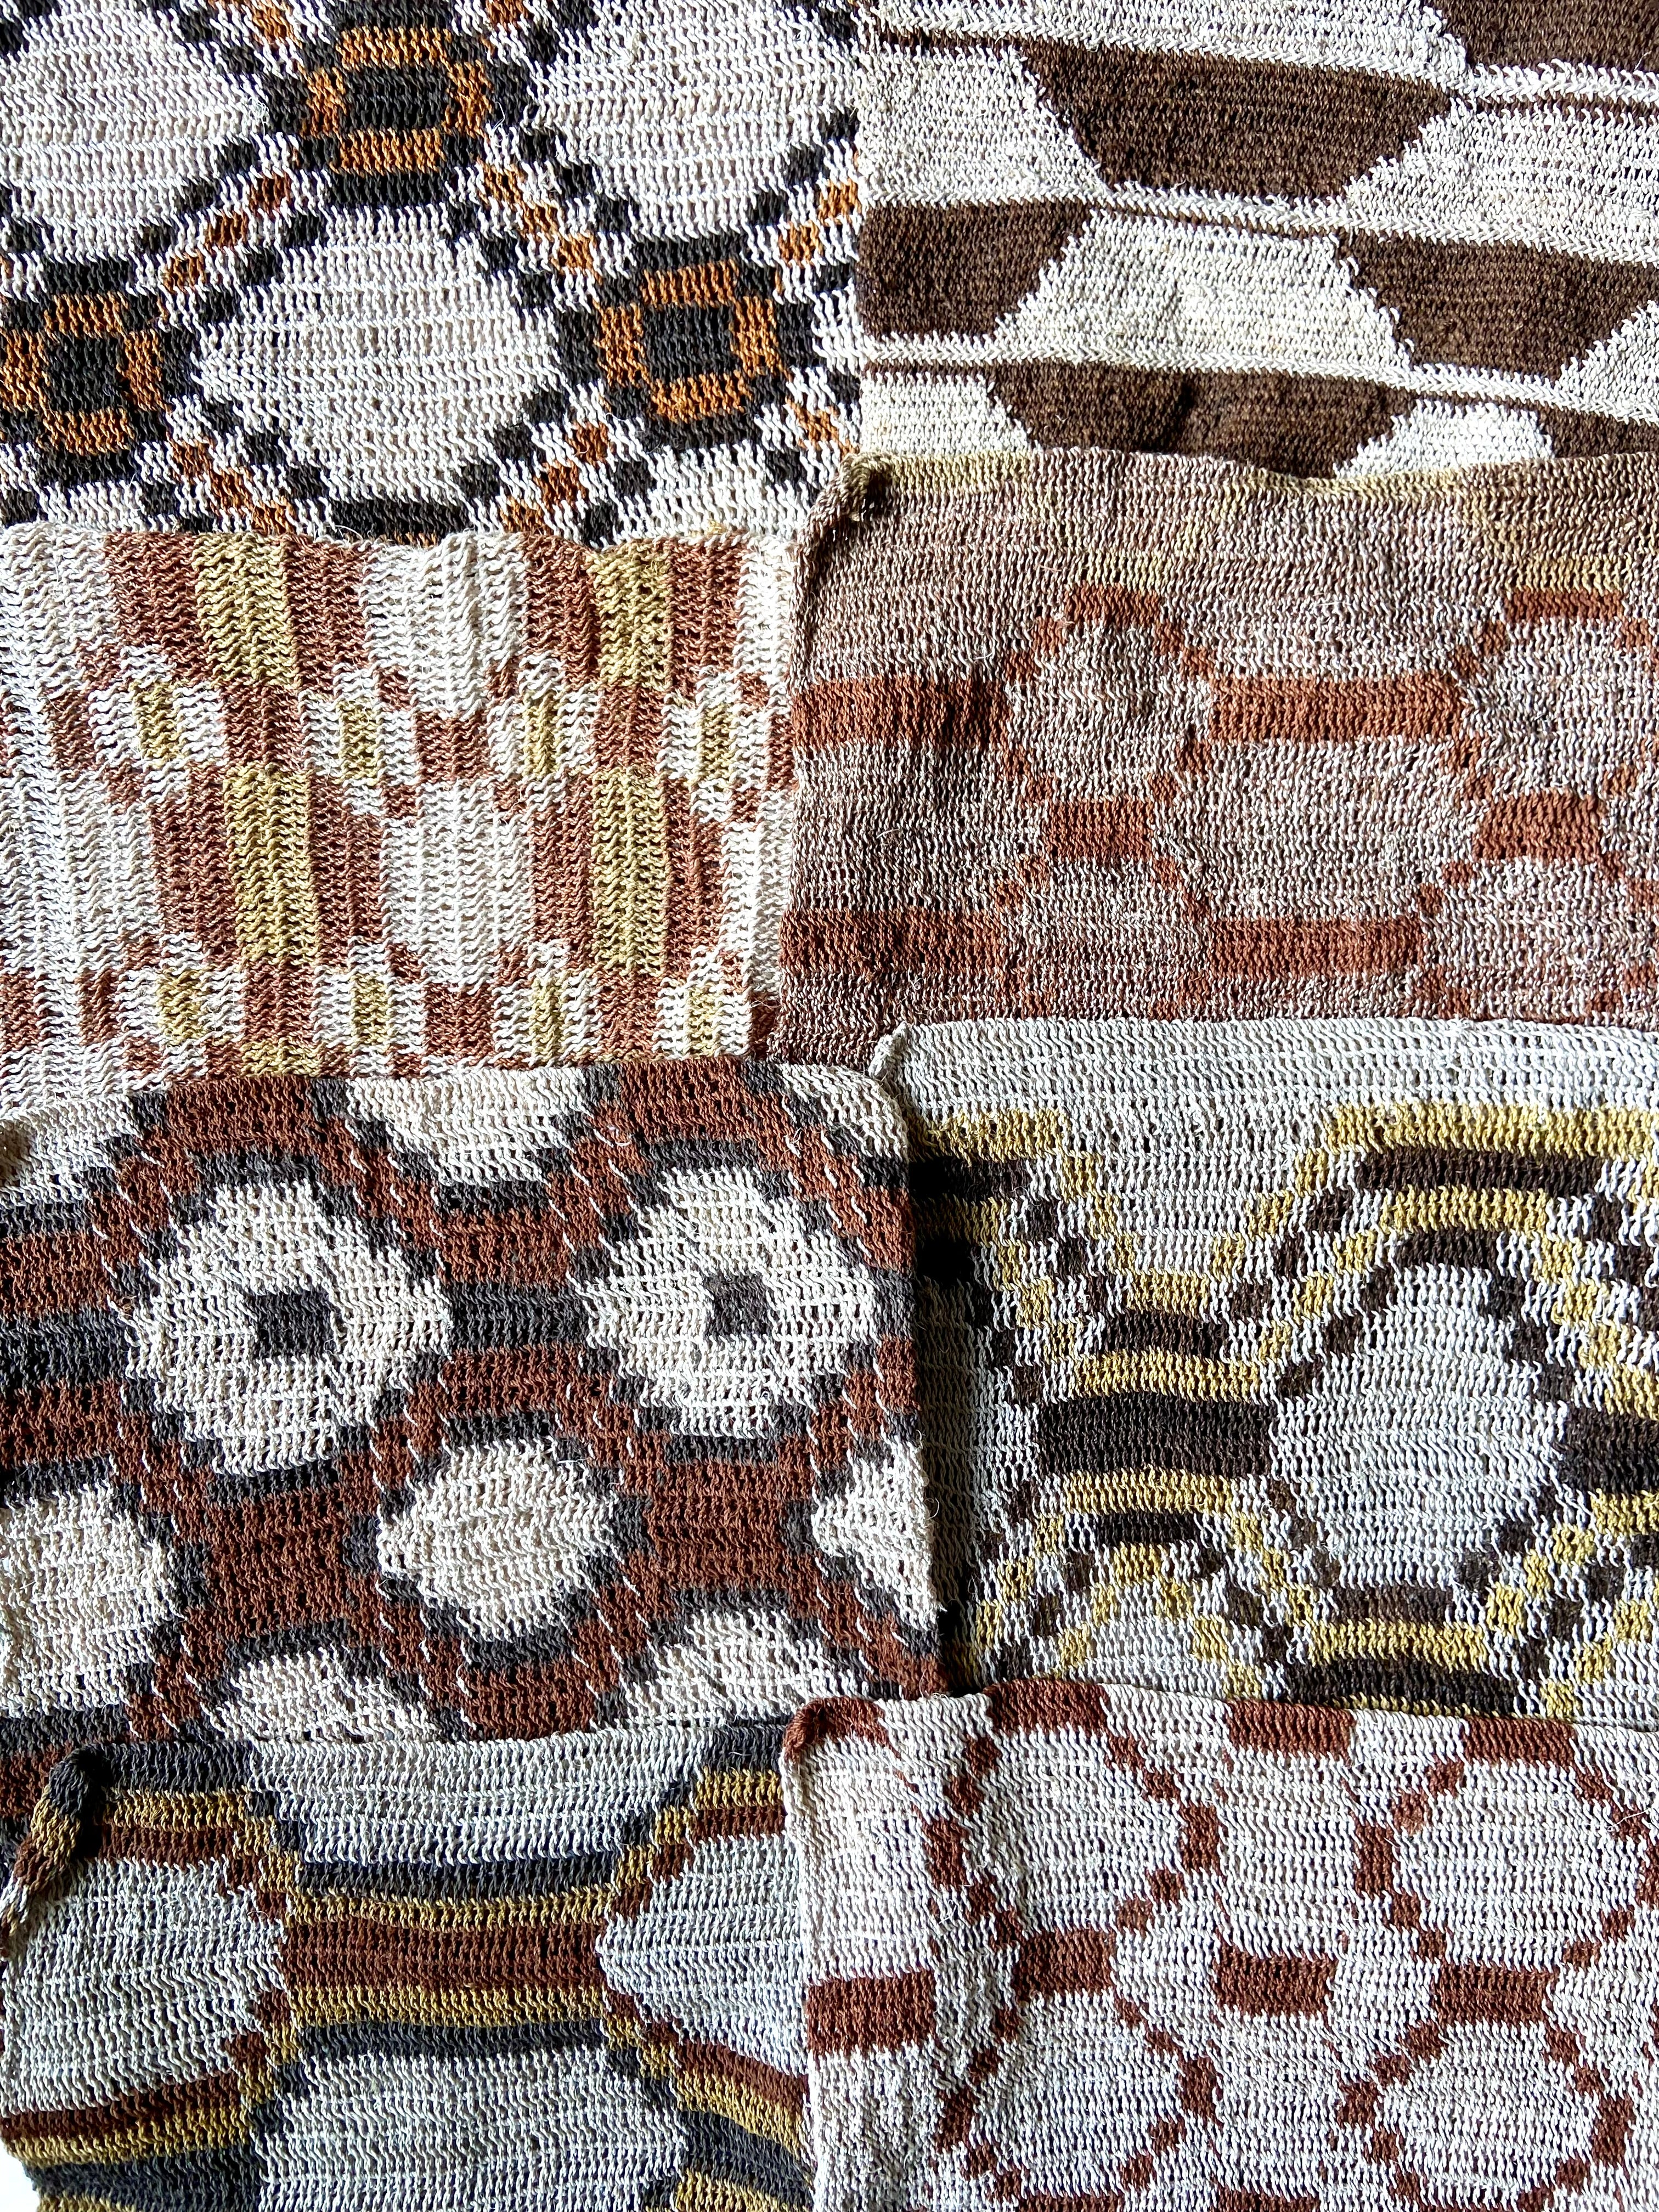 Cojín Wichí Guayacán de fibra de chaguar